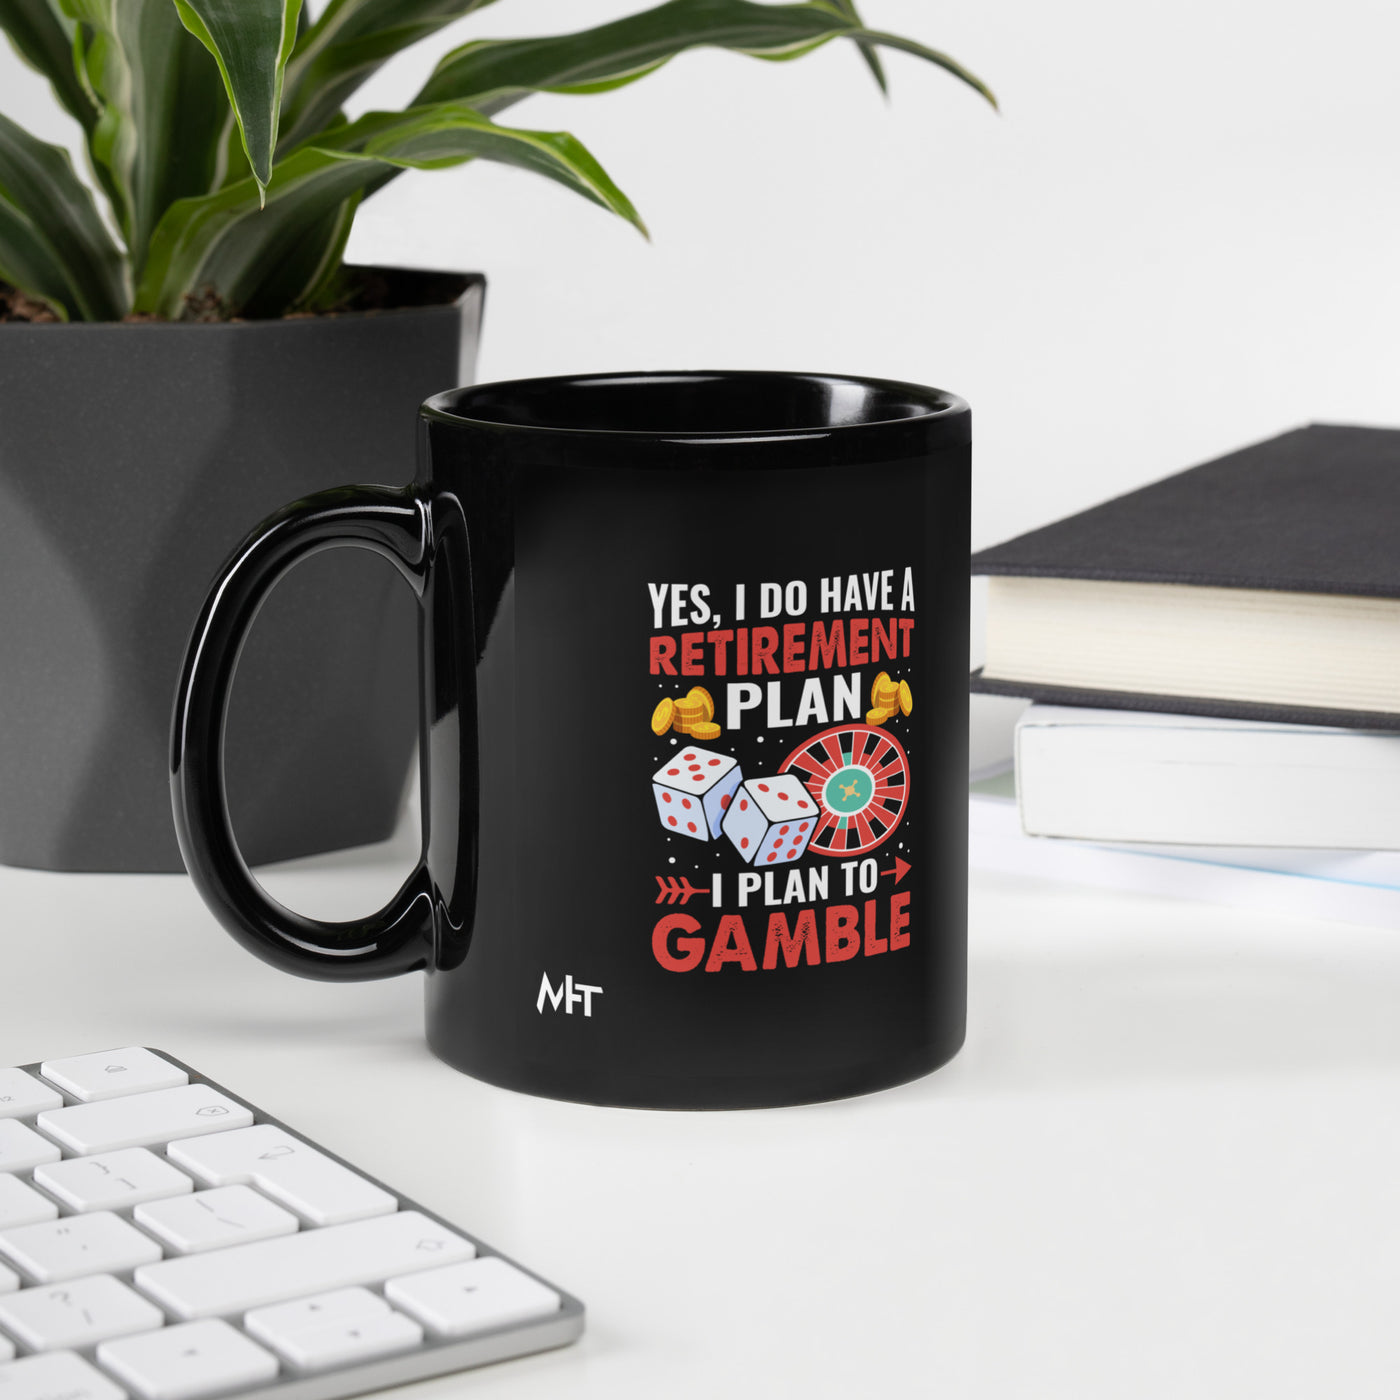 I Have a Retirement Plan; I Plan to Gamble - Black Glossy Mug